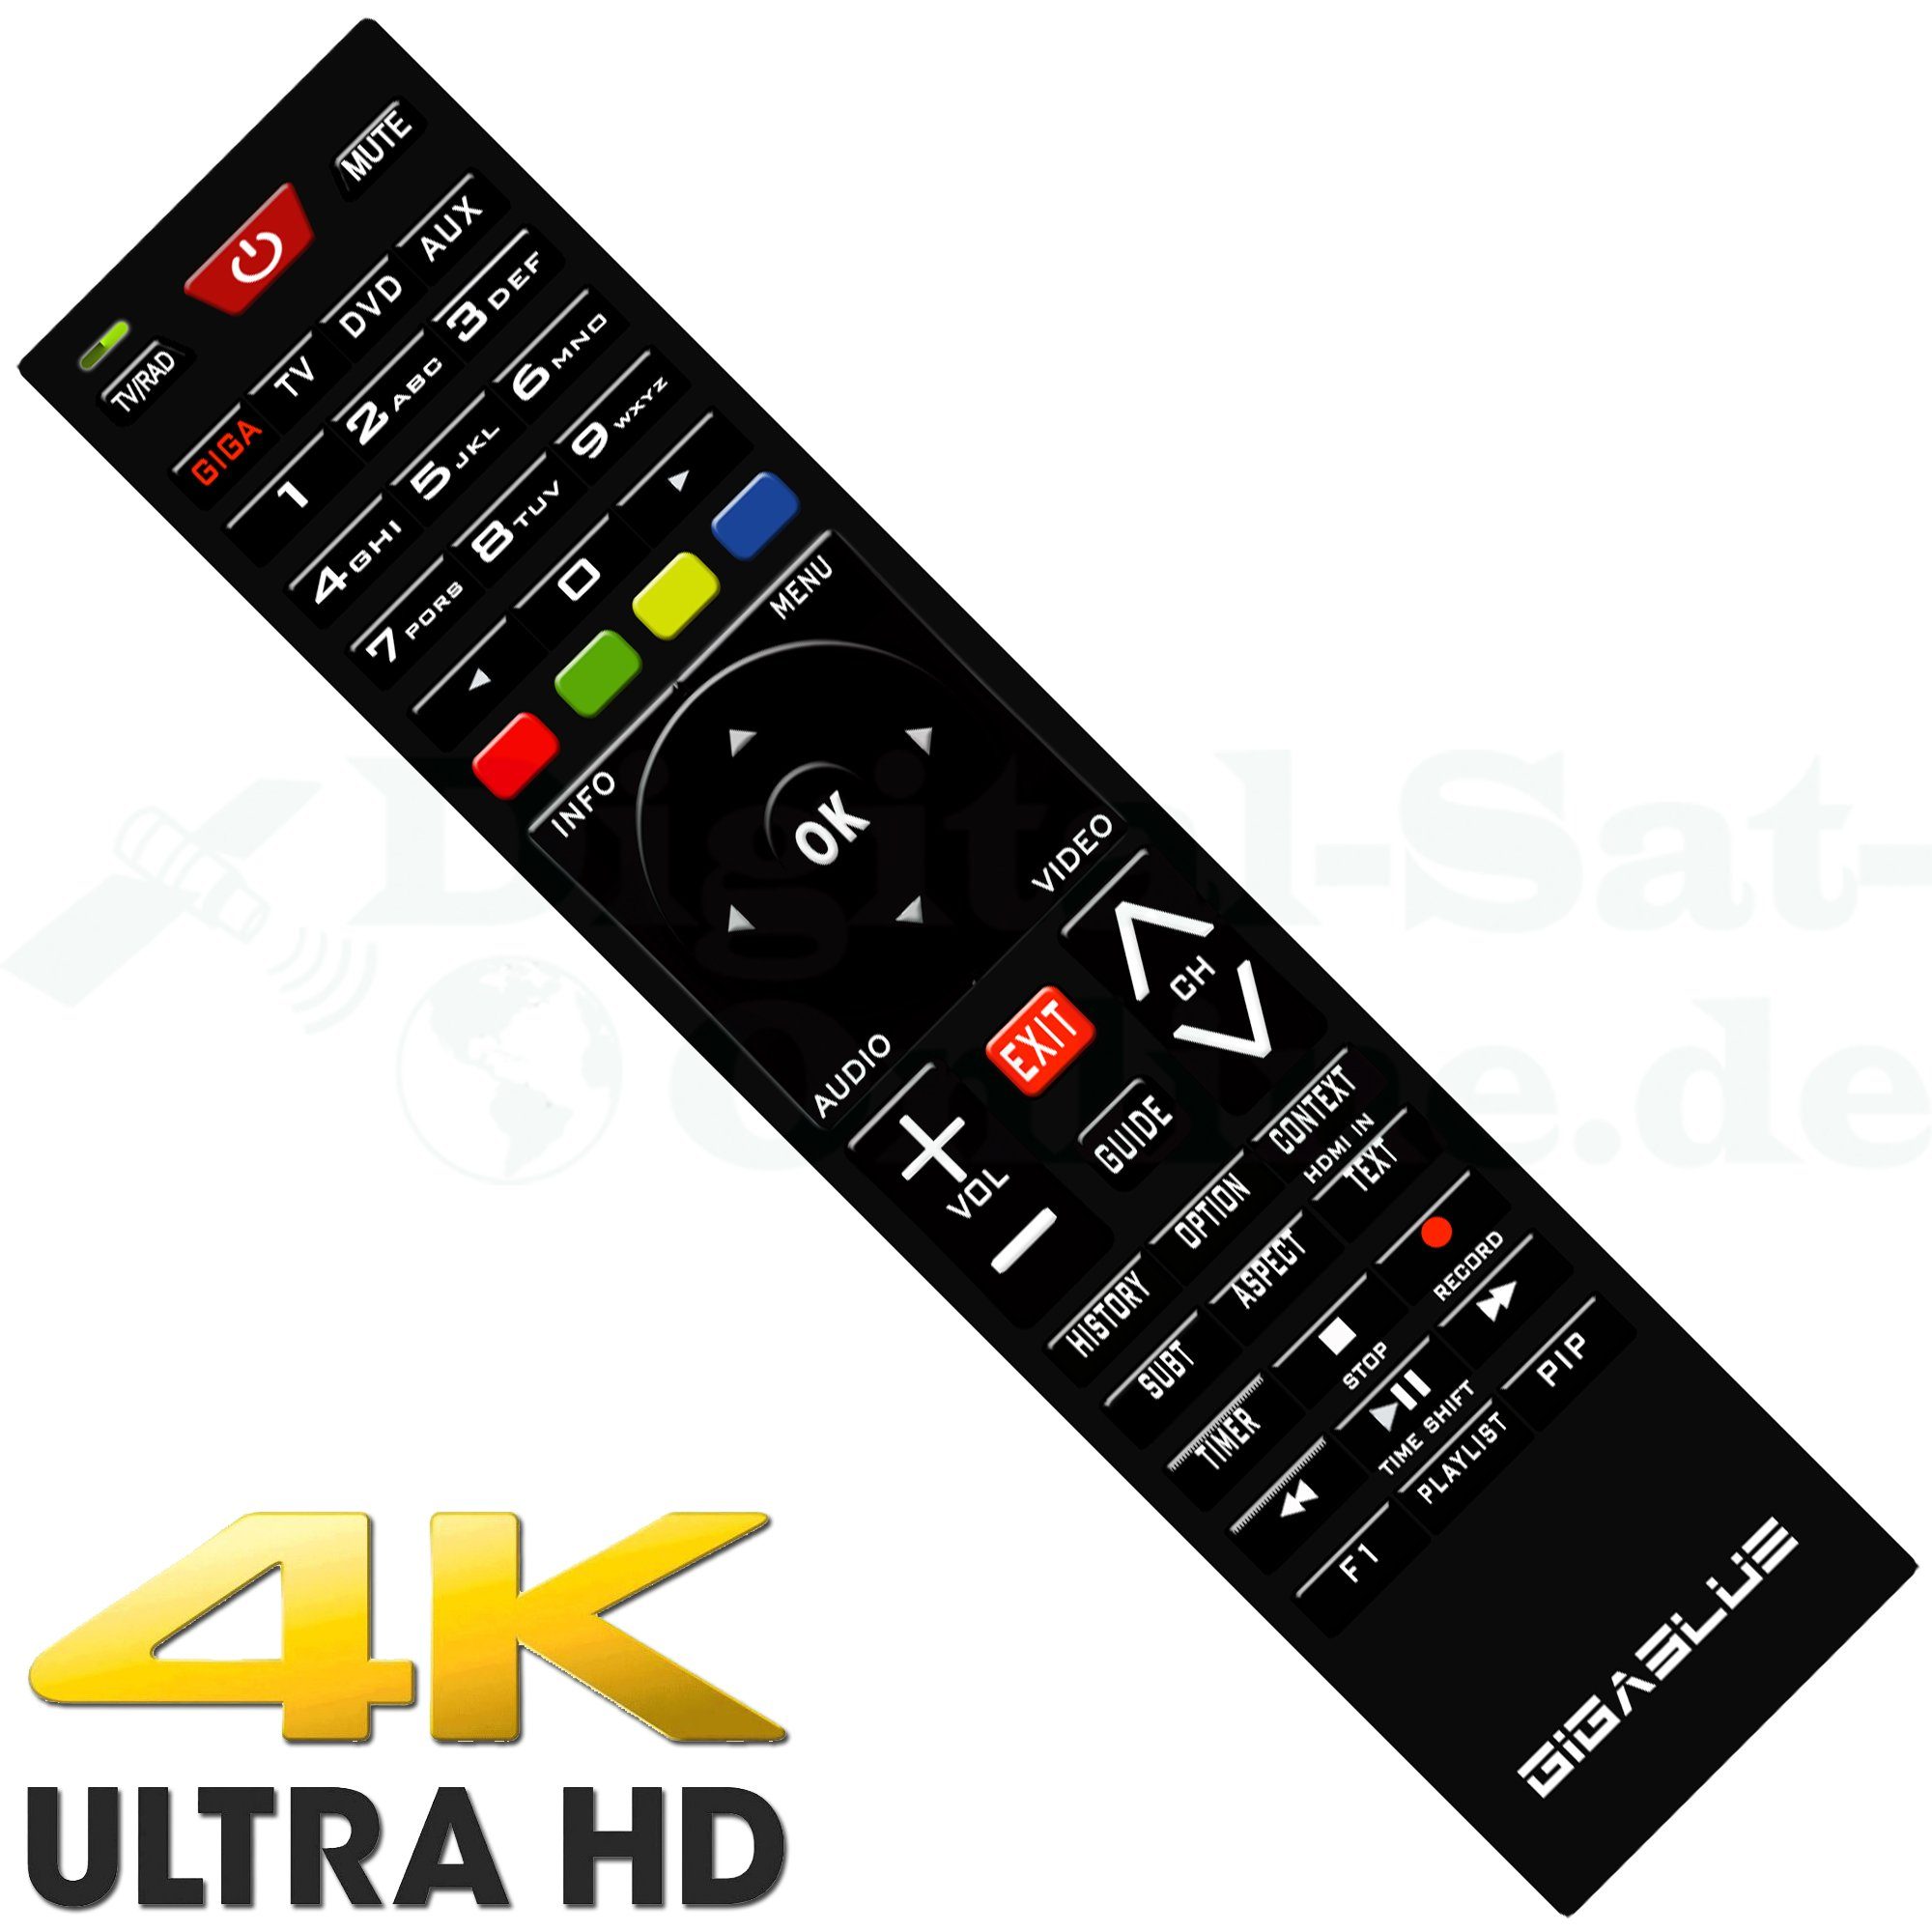 + 1200 UHD Gigablue Mbits DVB-T2/C SAT-Receiver Stick Trio Wifi Combo 4K DVB-S2X inklusive